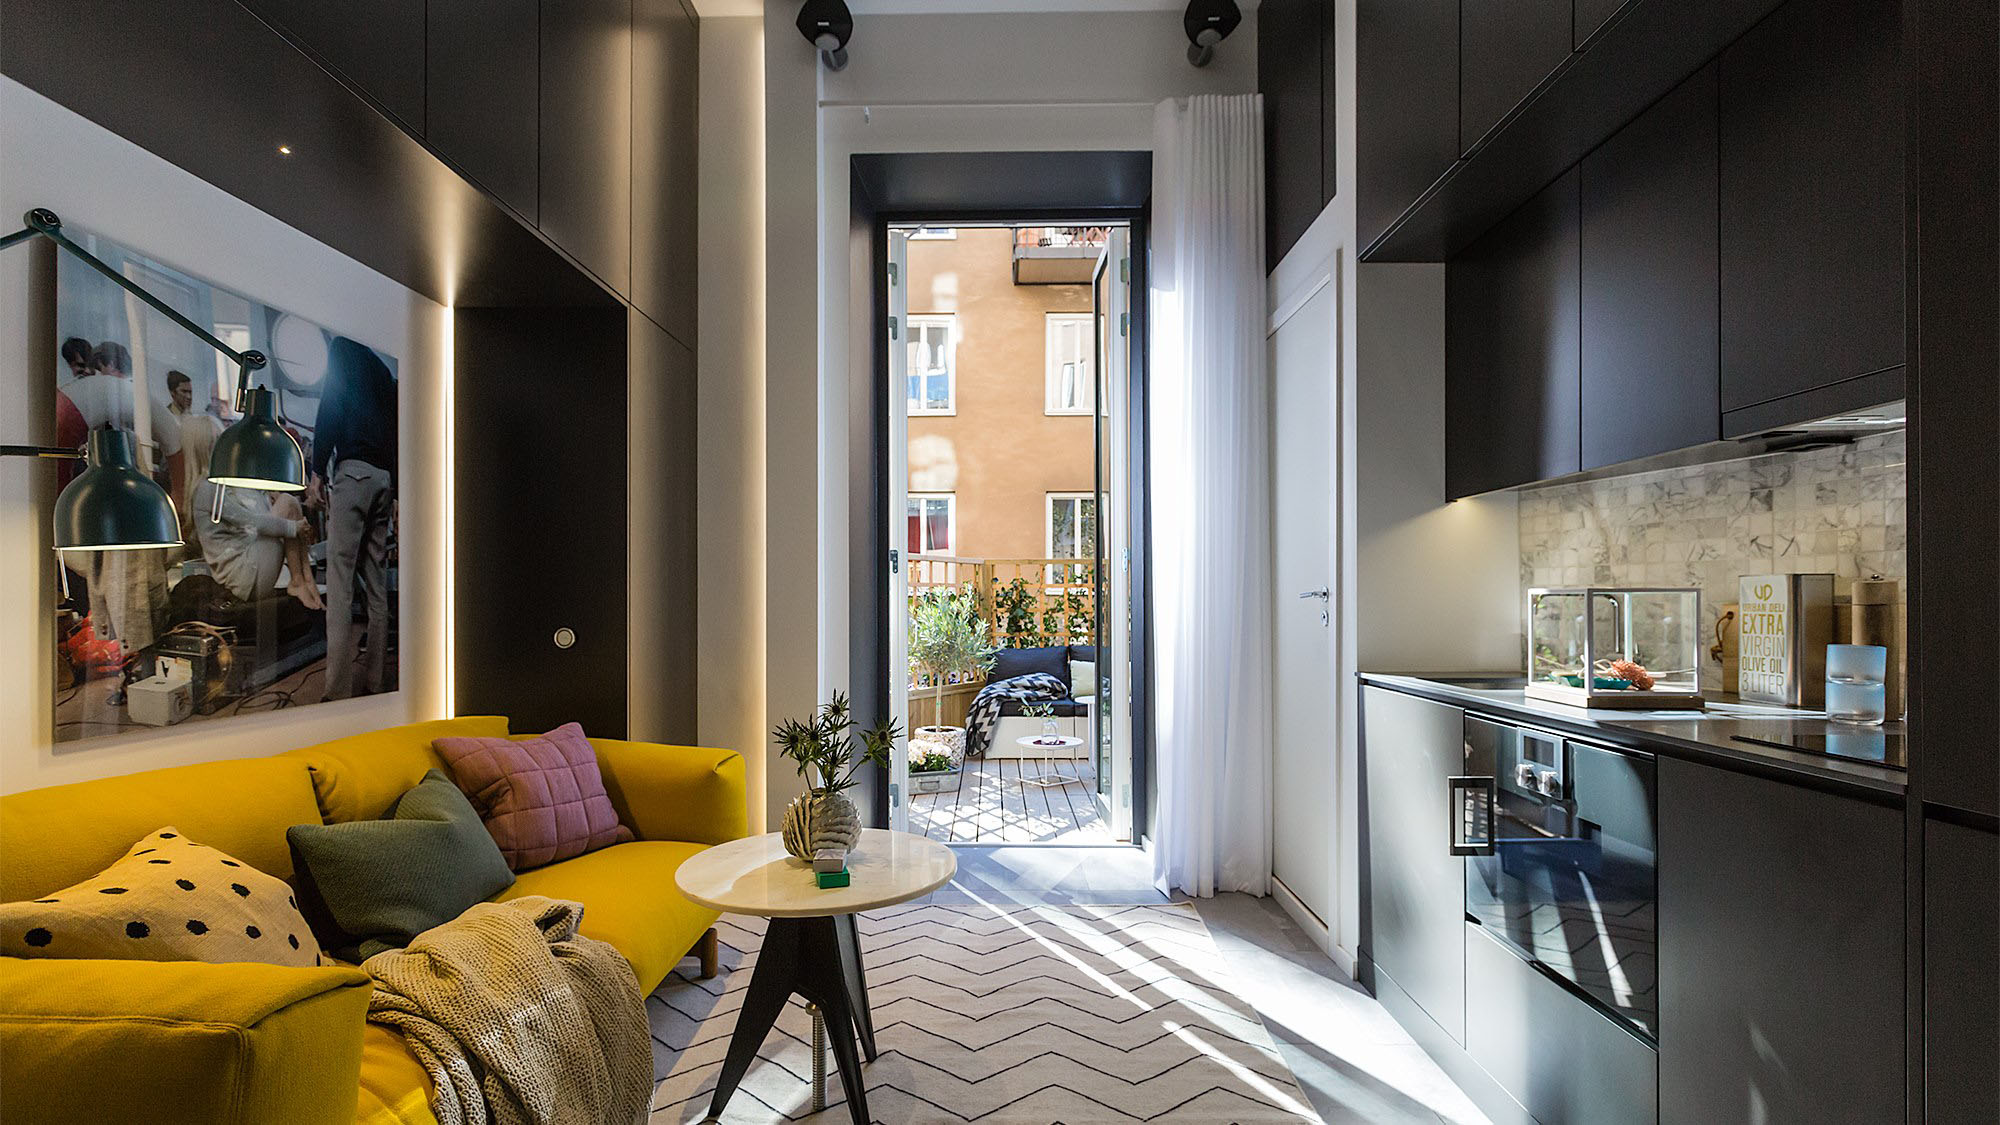 Studio Apartment Interior Design: Transform Your Small Space Into A Home